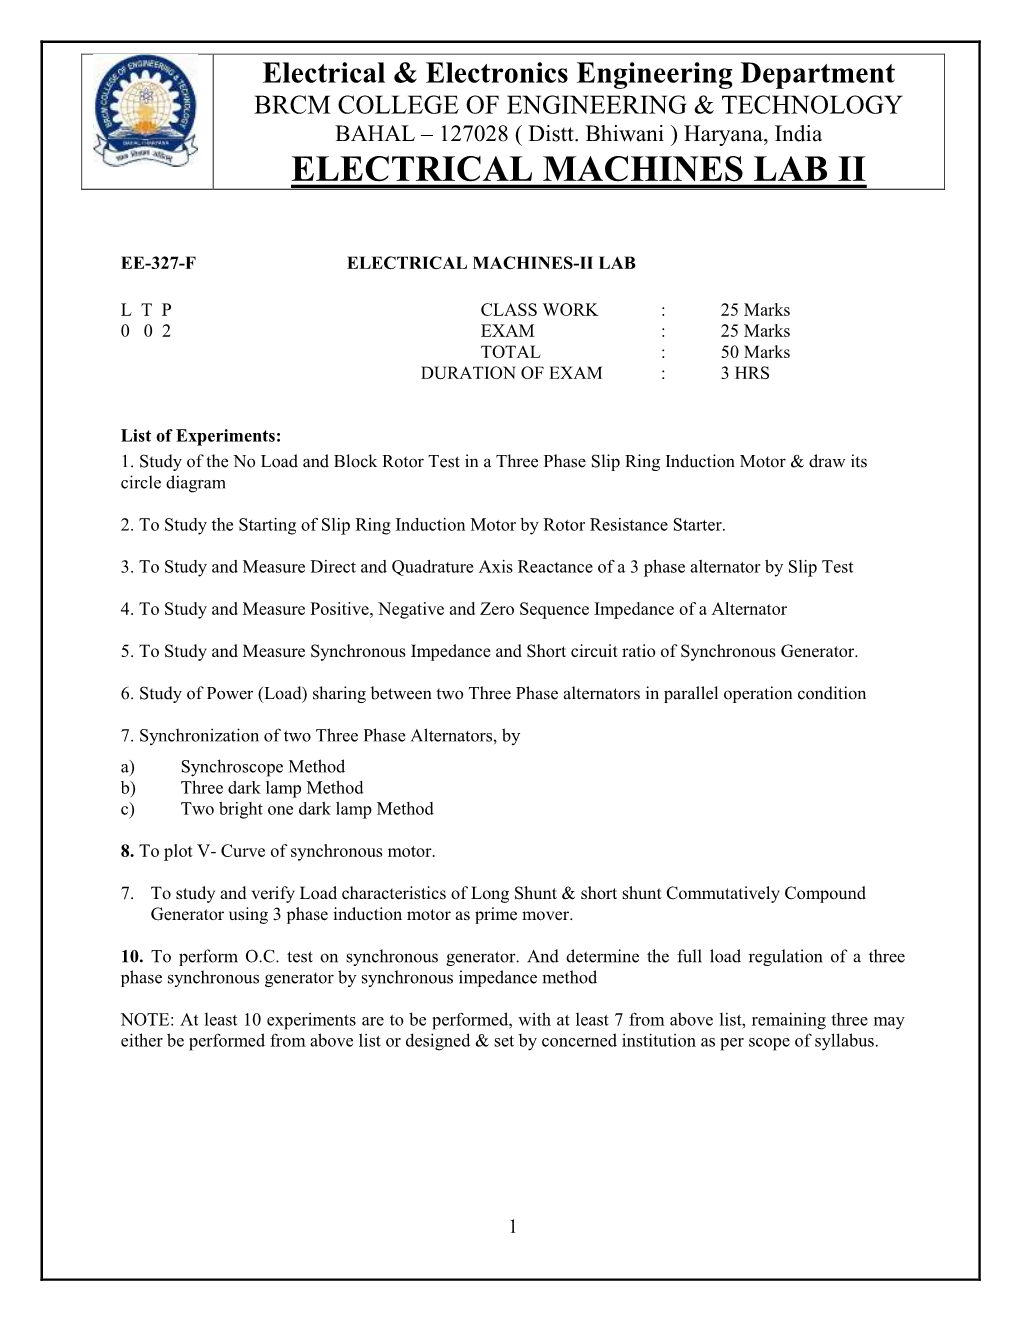 Electrical Machines Lab Ii